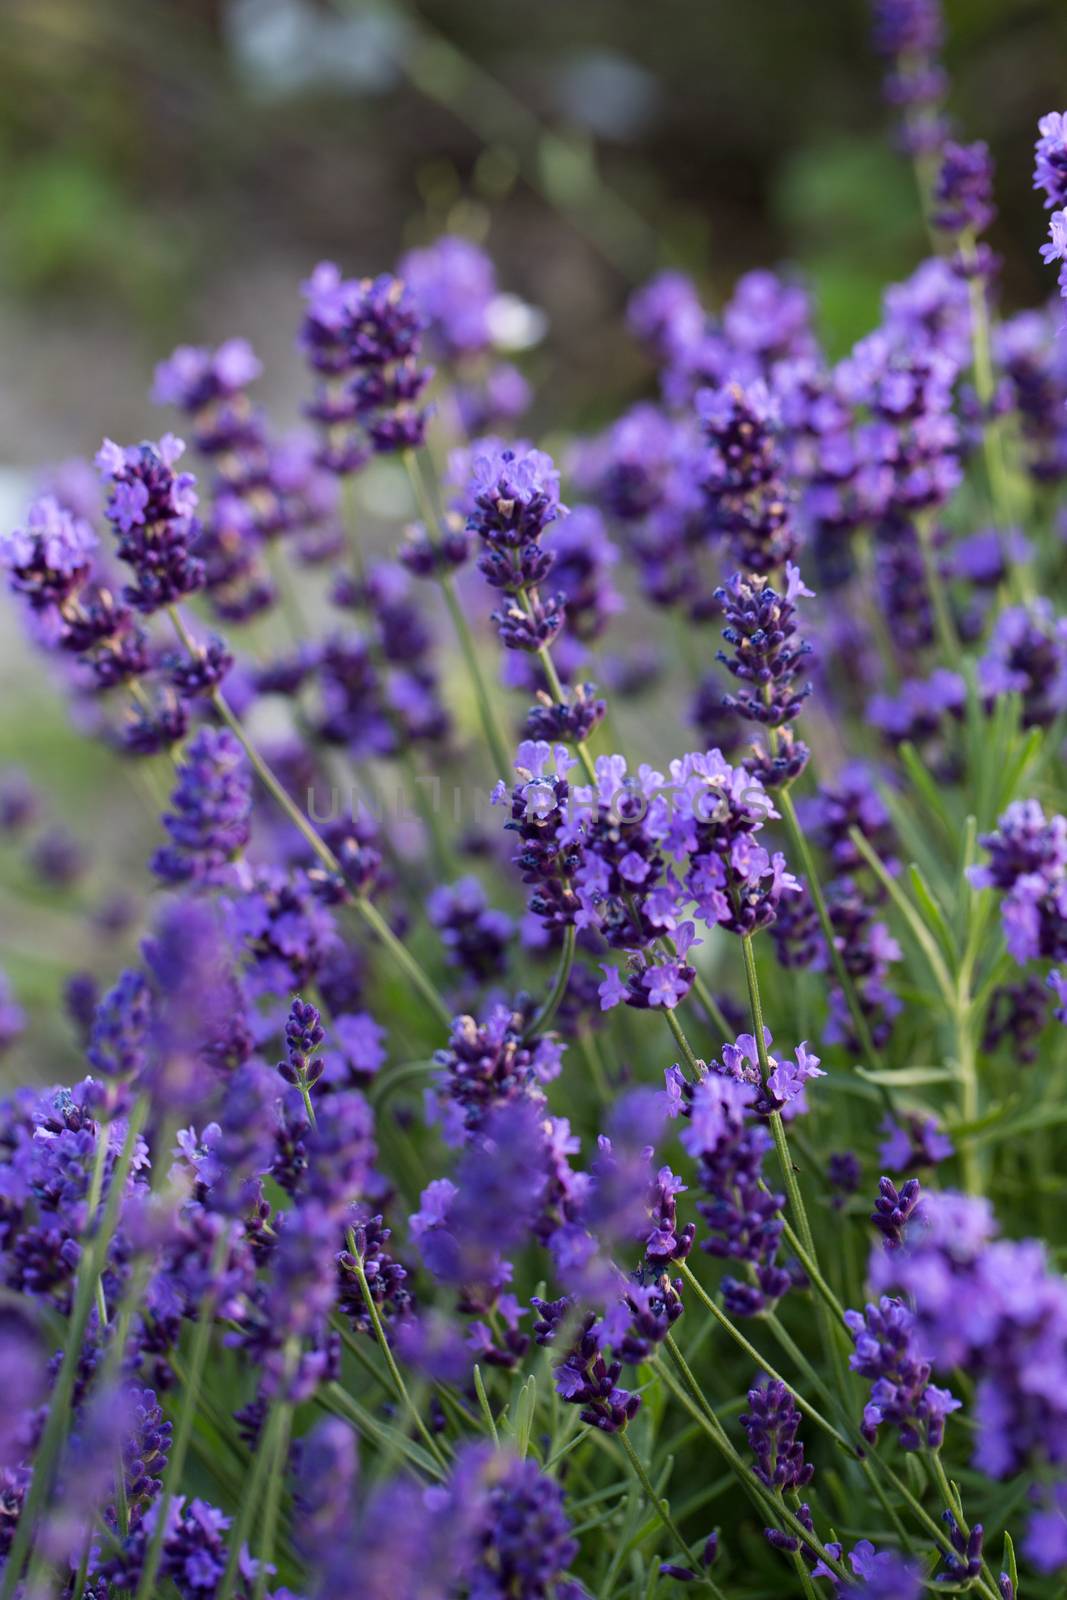 Gardens with the flourishing lavender by wjarek